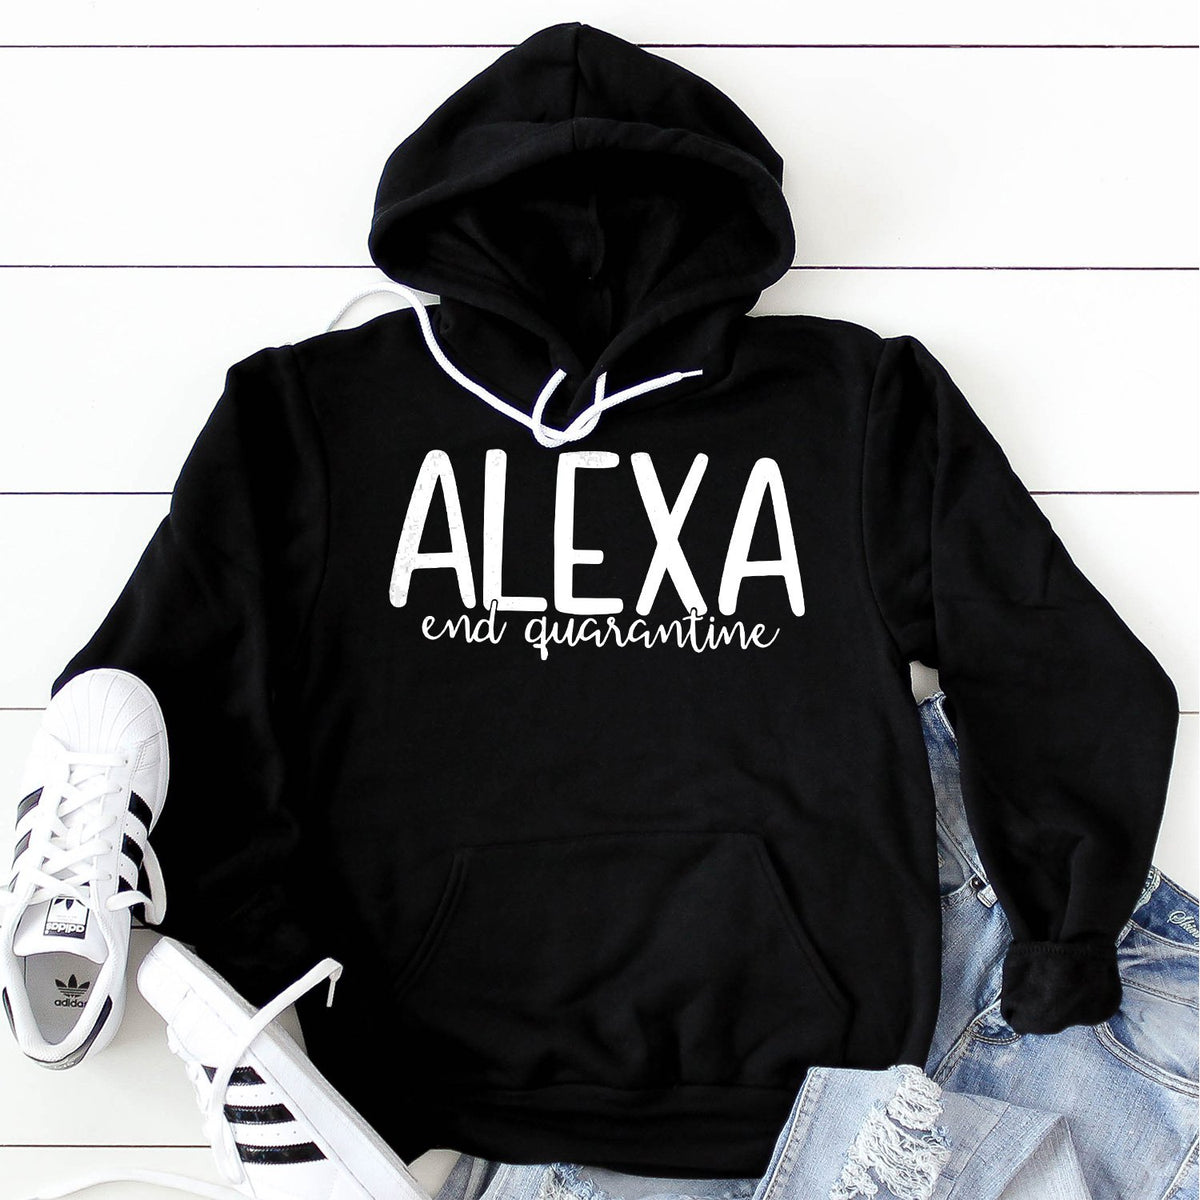 Alexa End Quarantine - Hoodie Sweatshirt